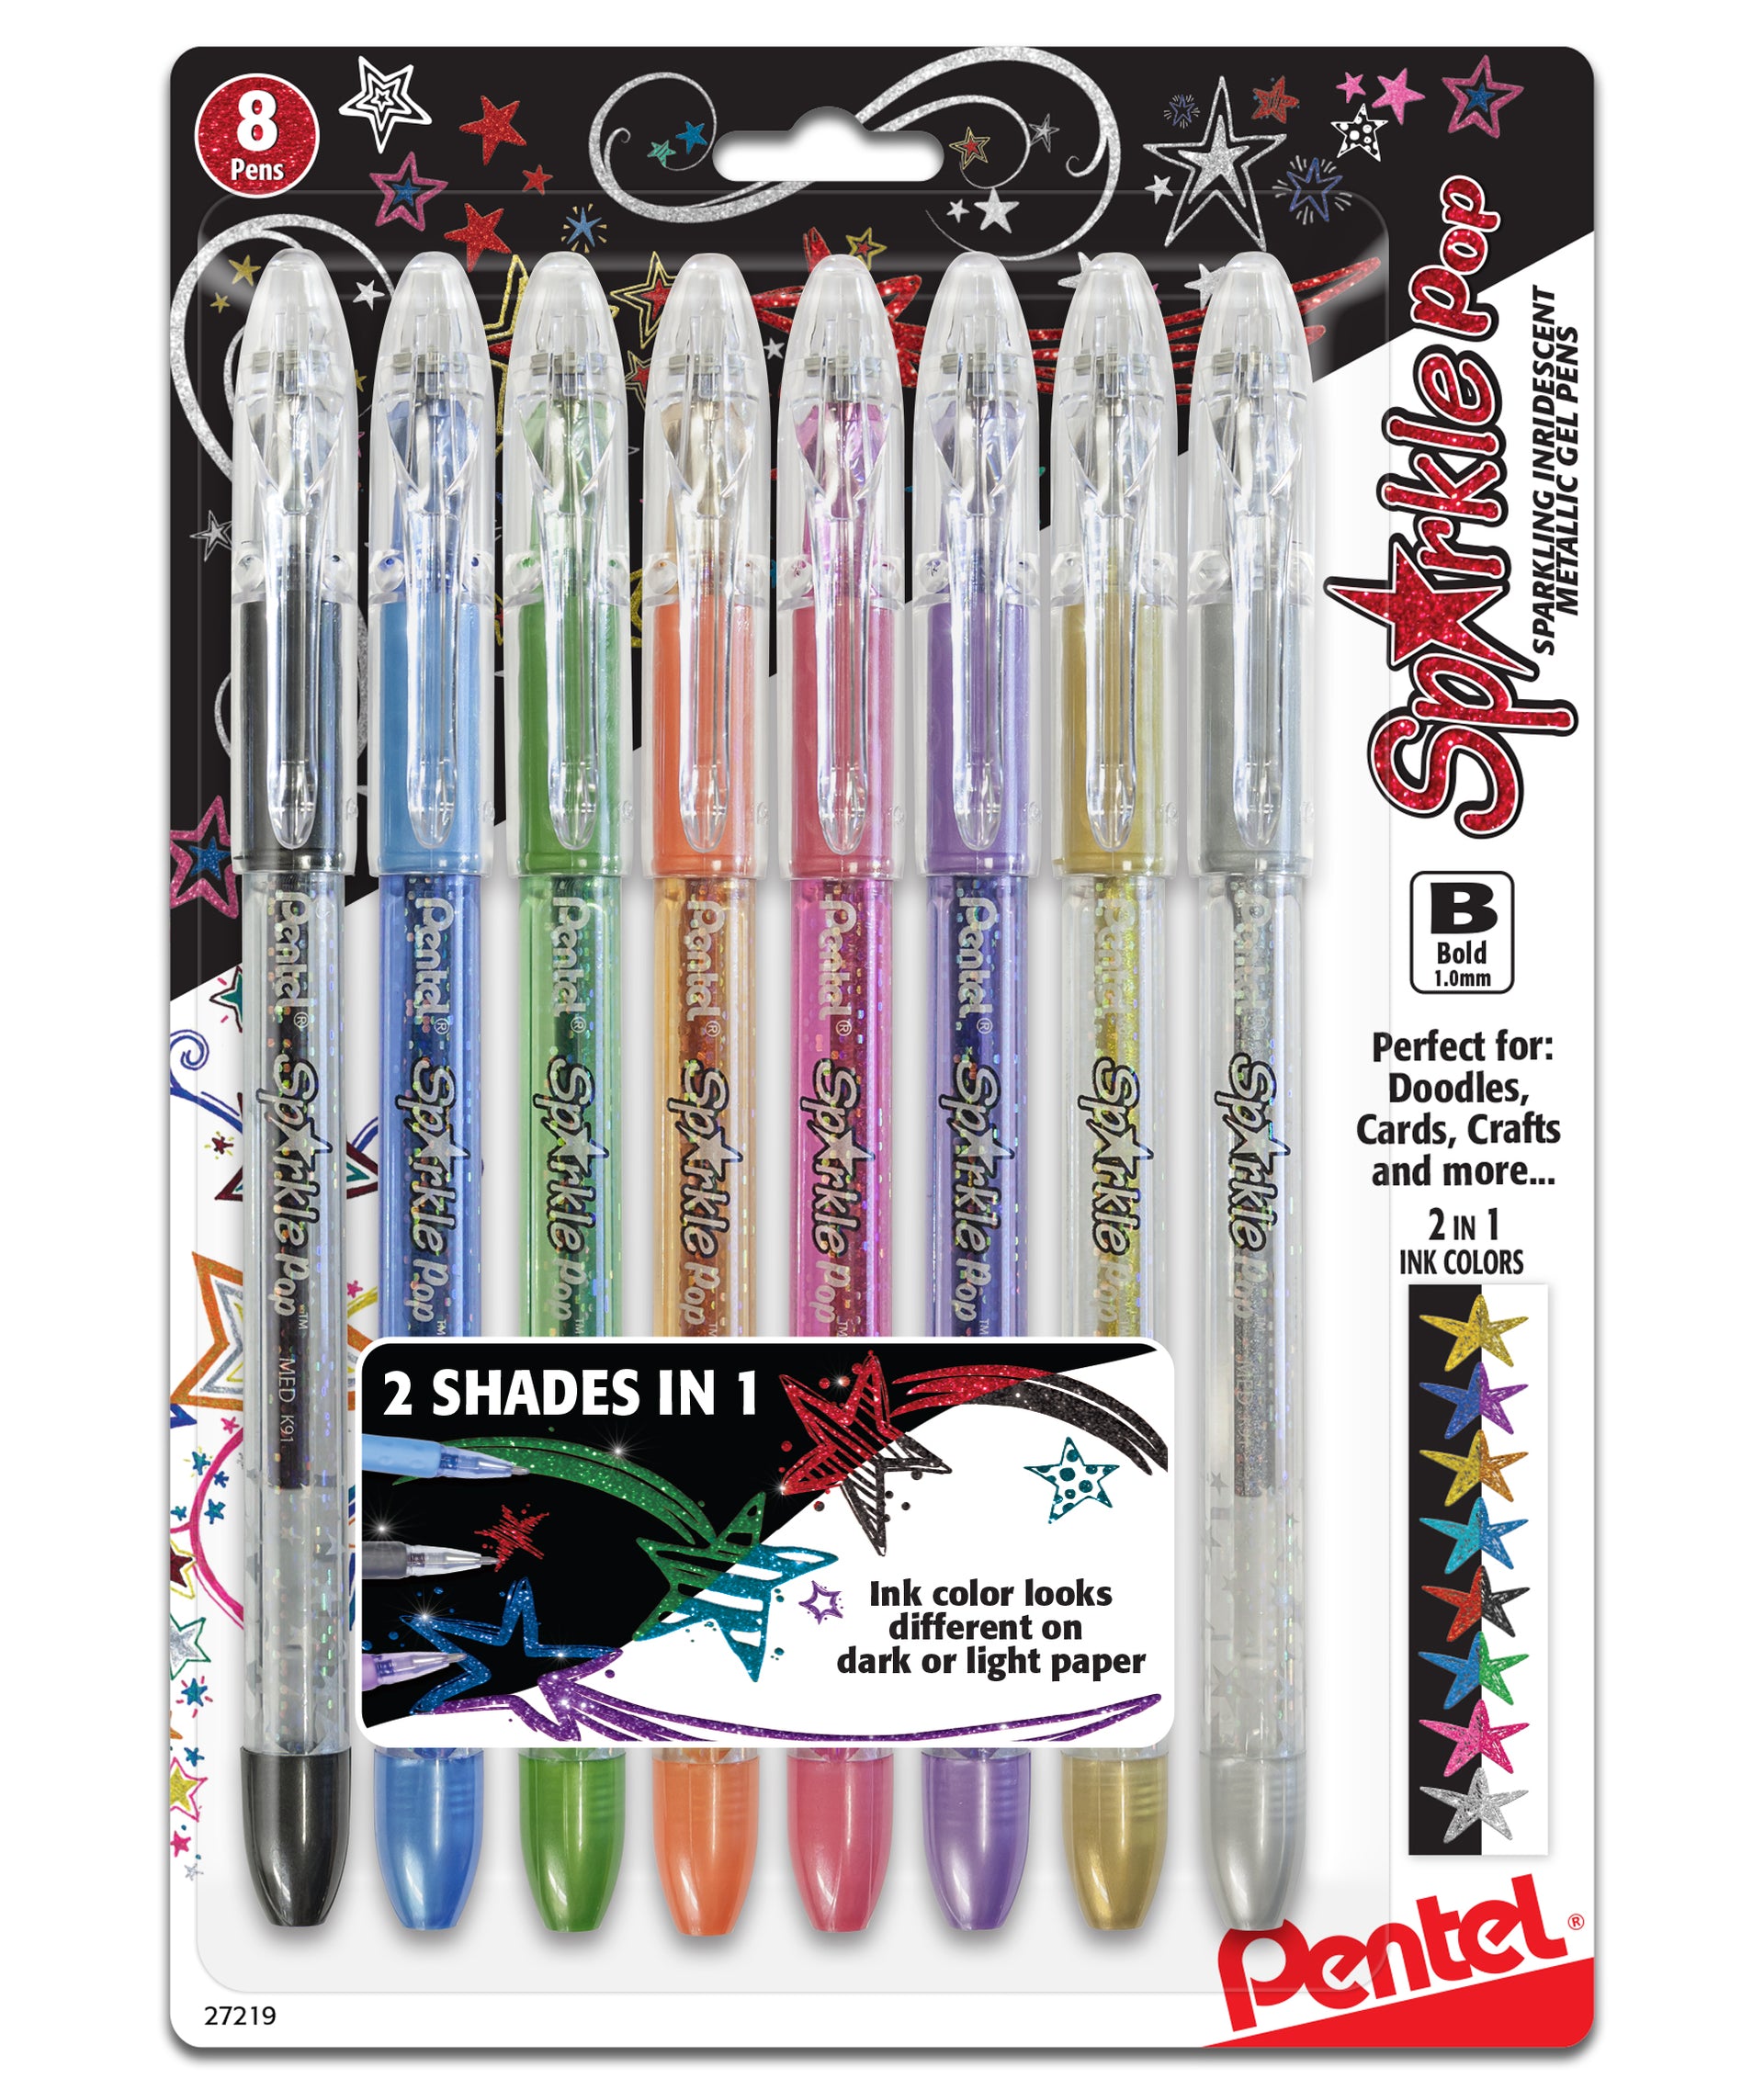 Glitter Sparkle Pencil Assortment, 12 Per Pack, 12 Packs